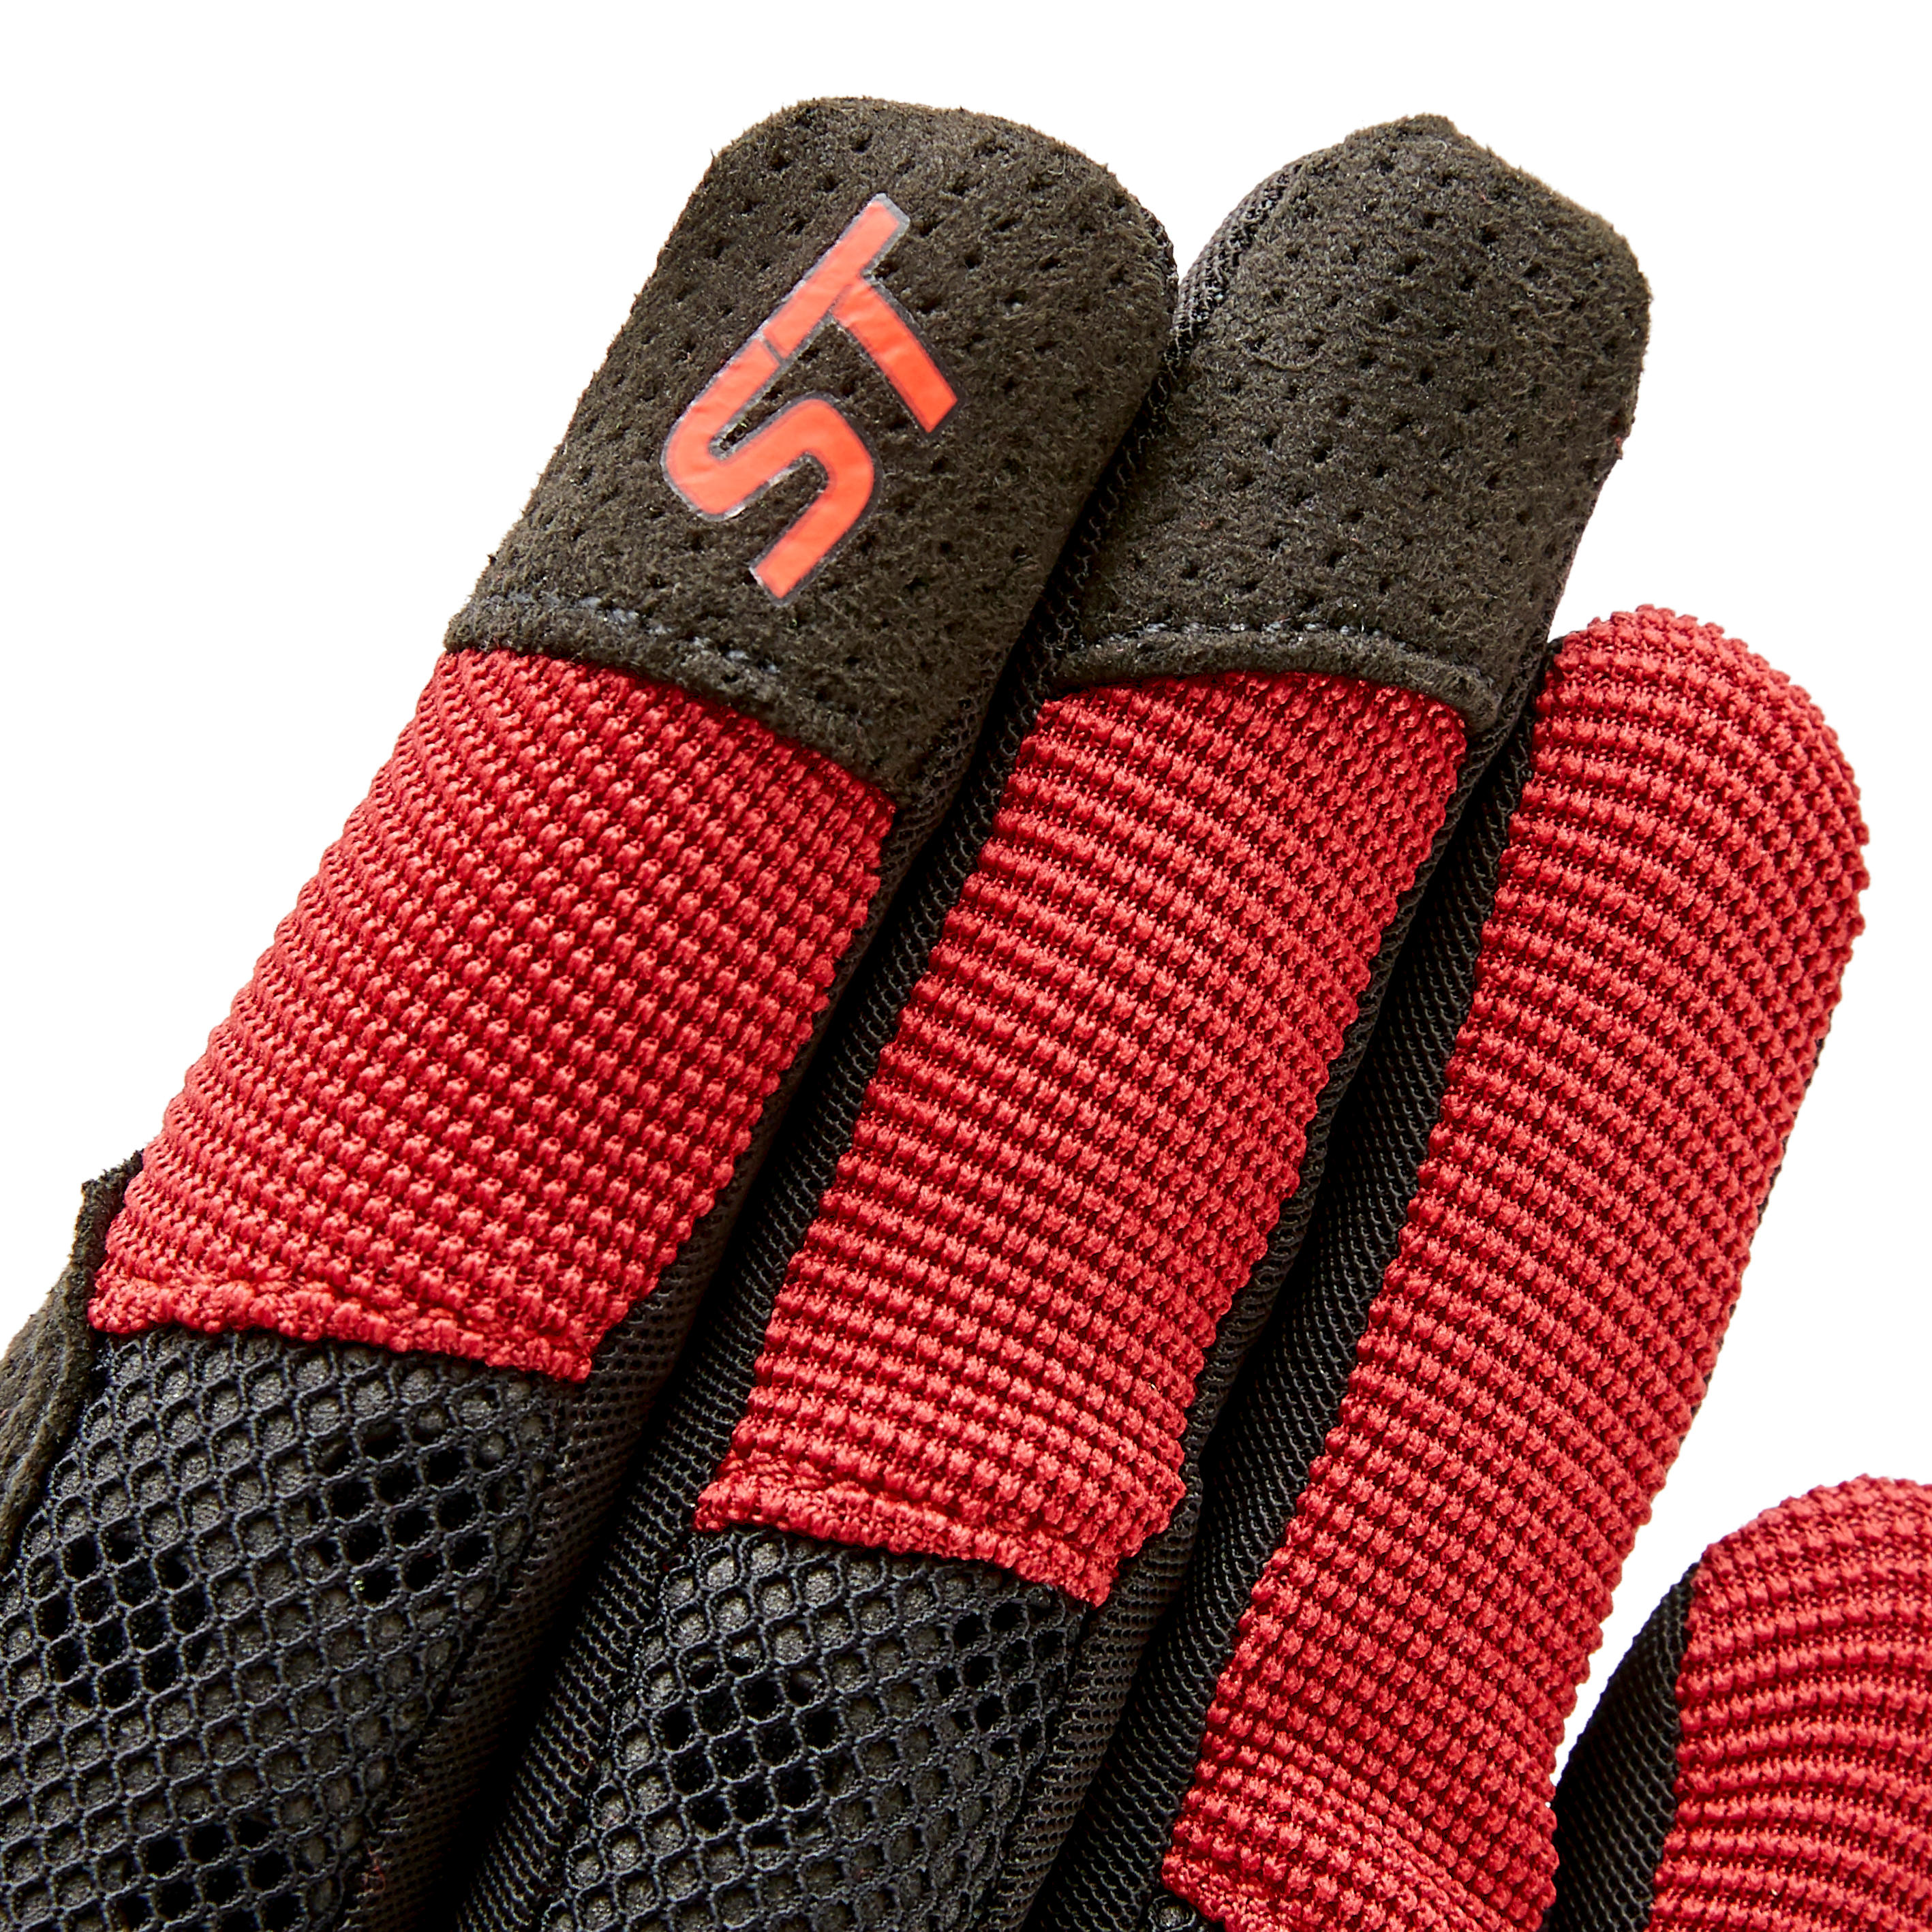 ST 500 Mountain Bike Gloves - Red 7/11